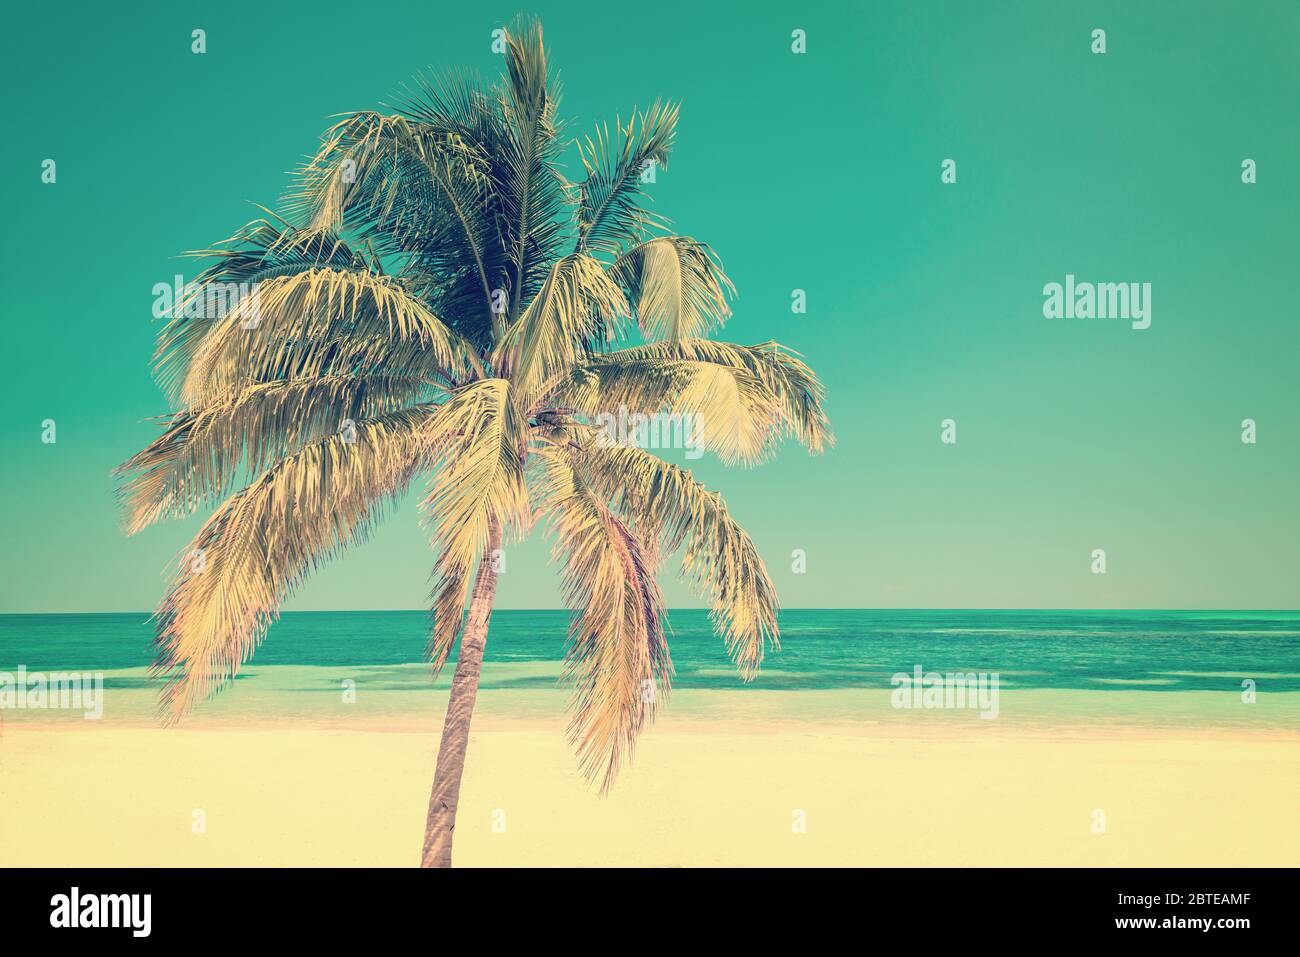 Palm tree on a beach in Cayo Levisa Cuba, vintage style process Stock Photo